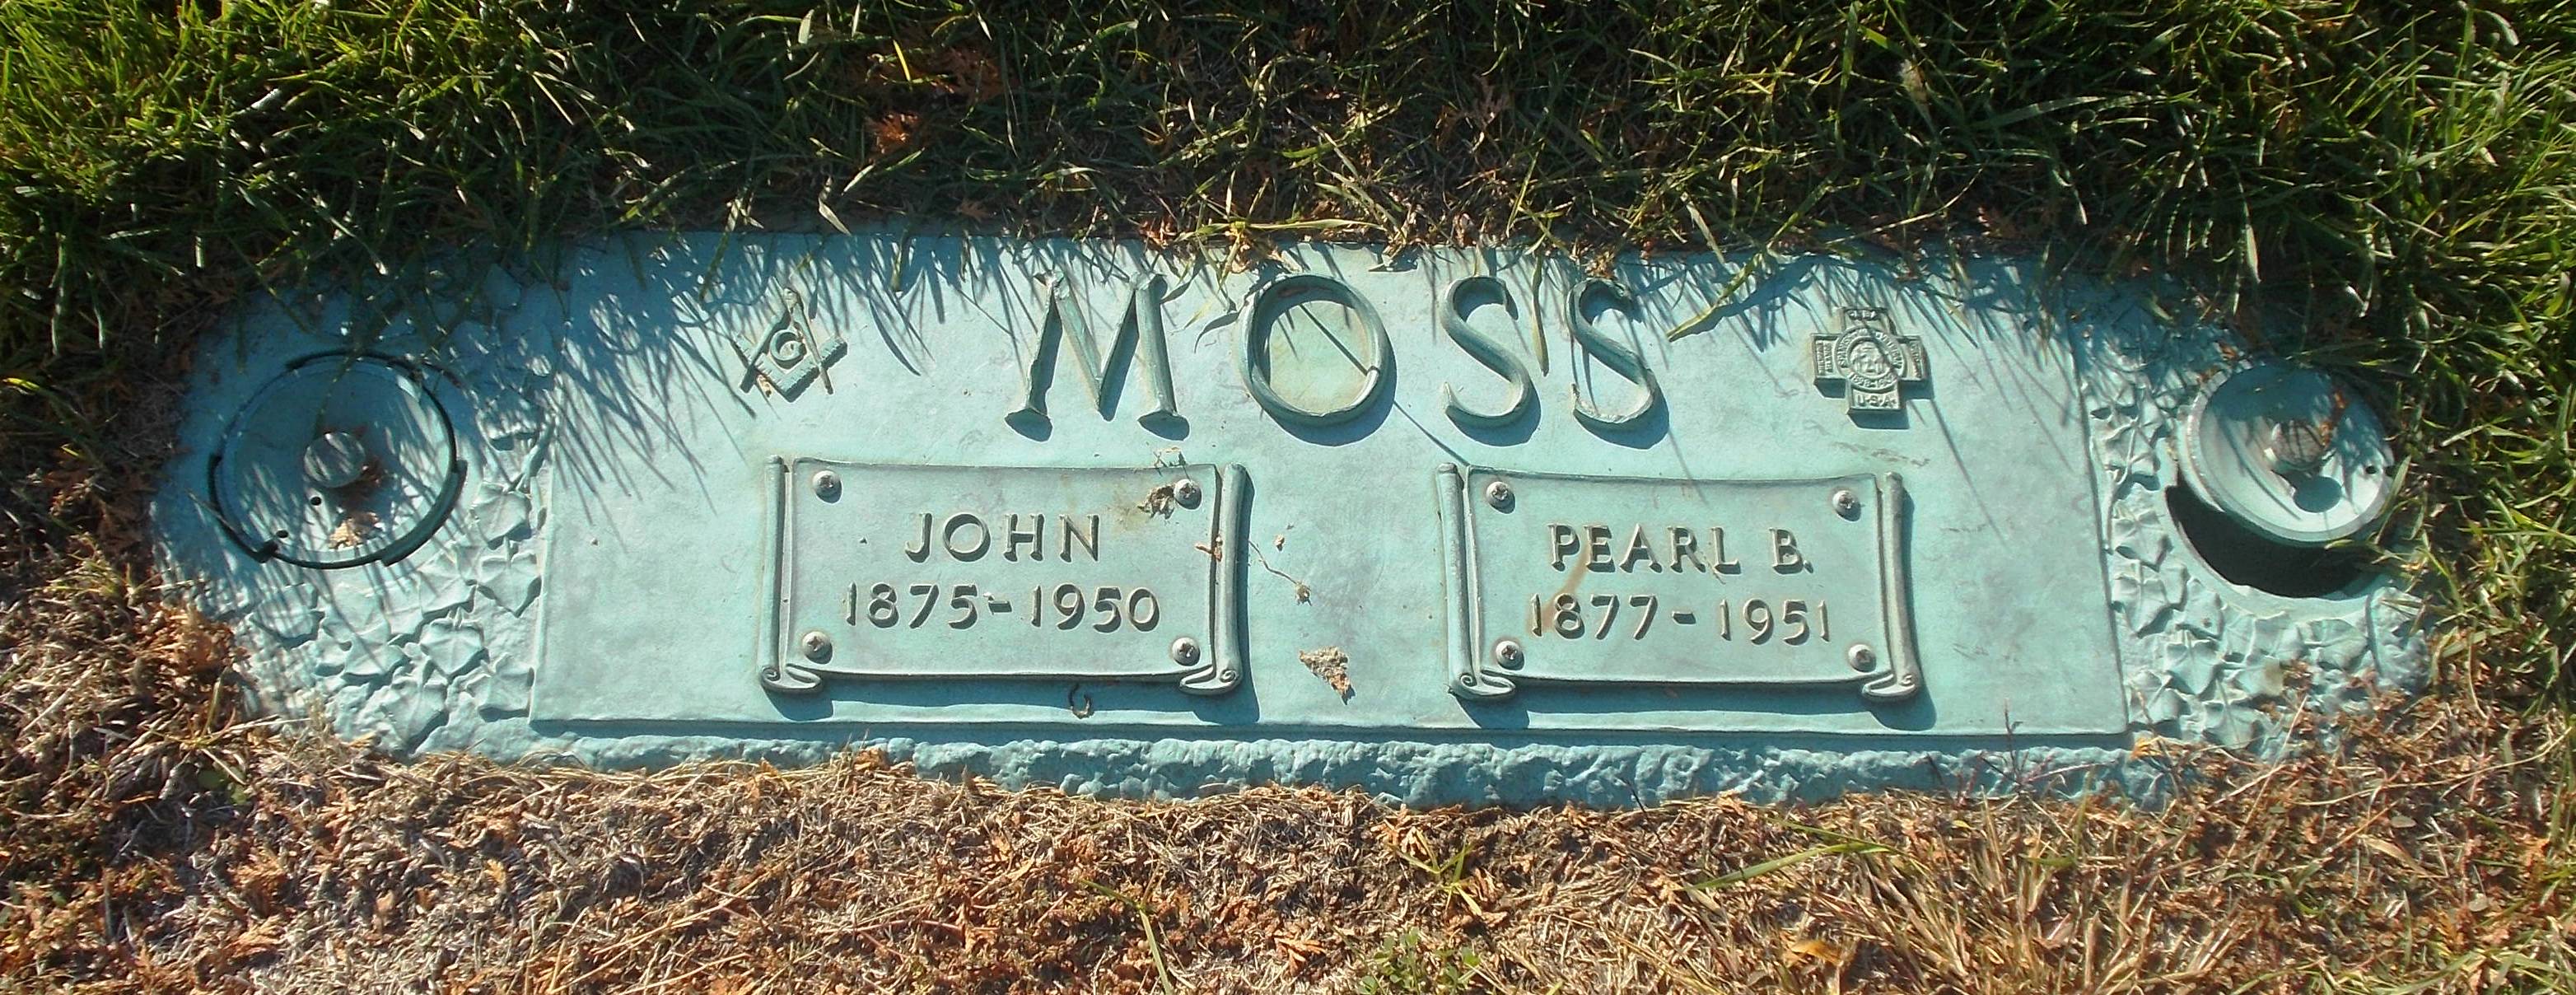 Pearl B Moss